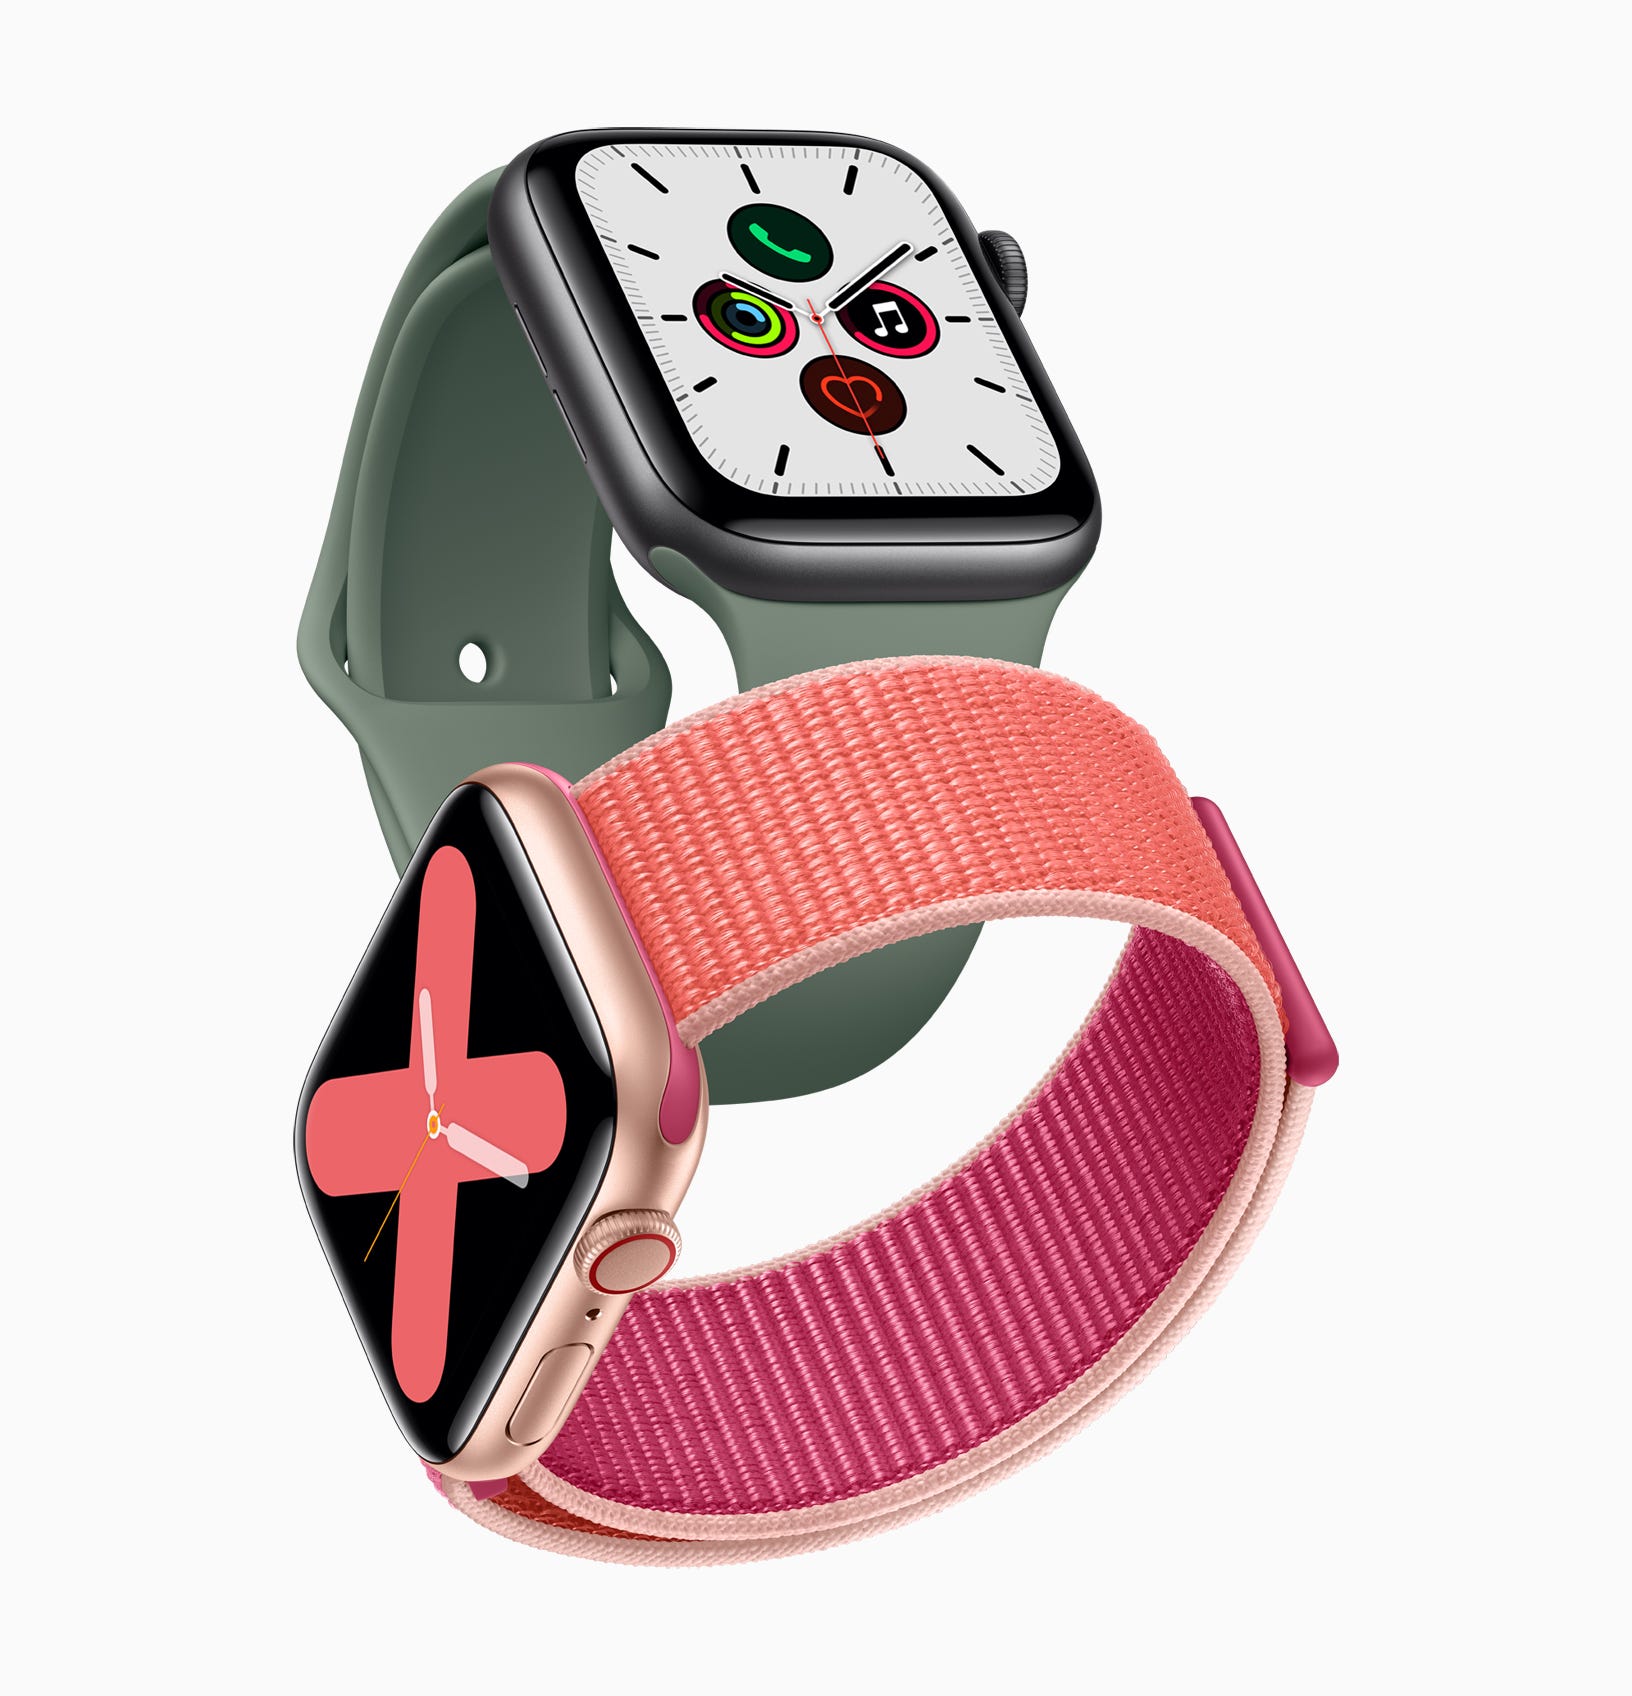 Apple Watch Series 5 isn't yet answer to sleep tracking dreams